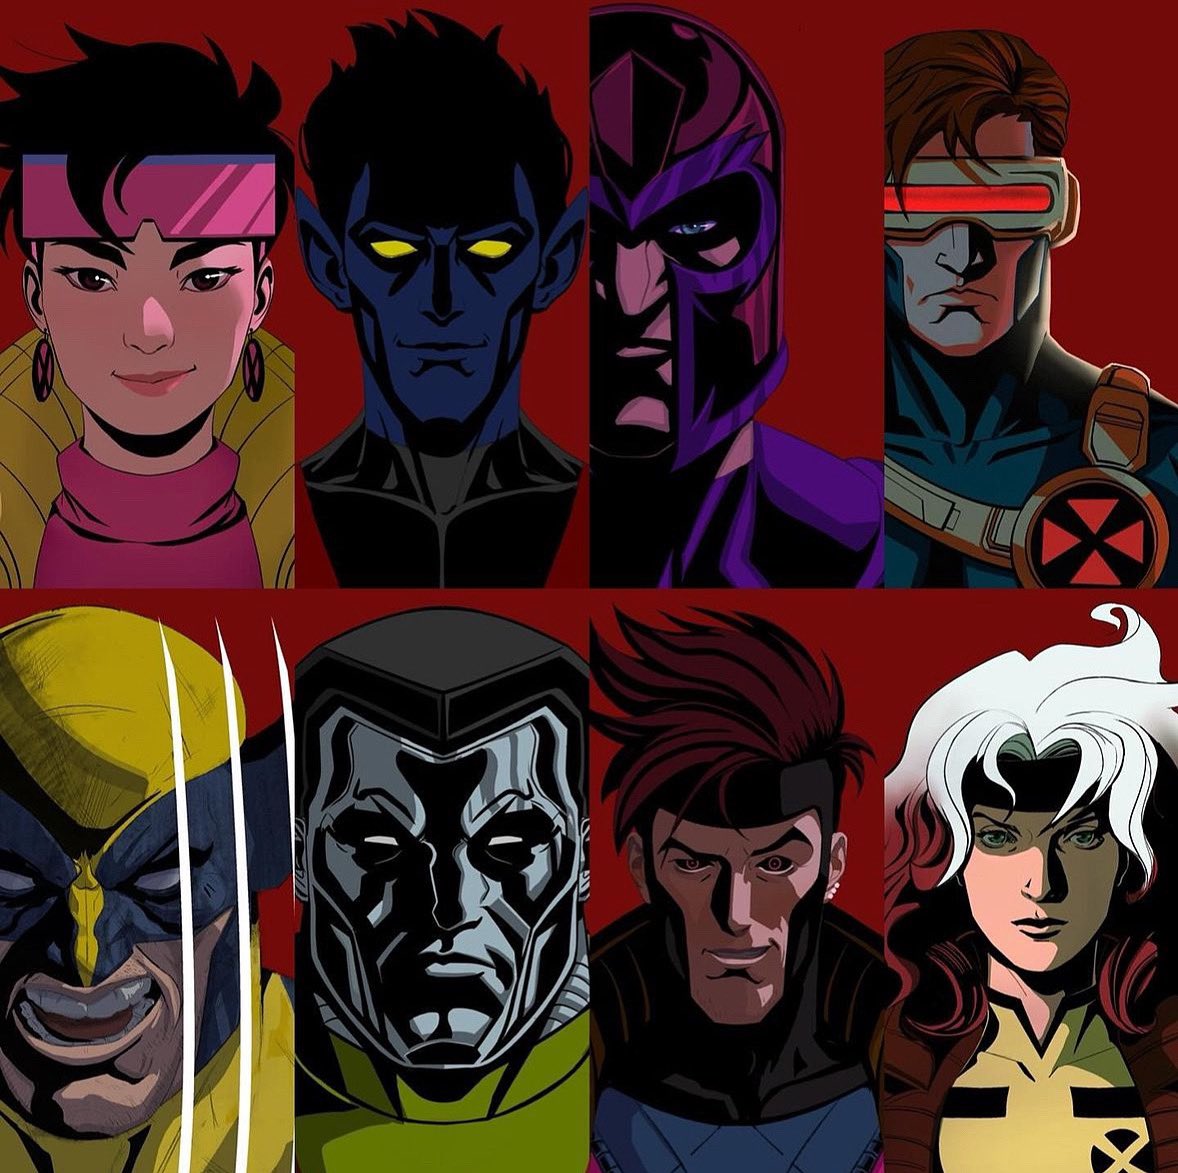 Casting! X-Men portraits by @JustinholtonA #xmen #wolverine #magneto #cyclops #rogue #gambit #nightcrawler #colossus